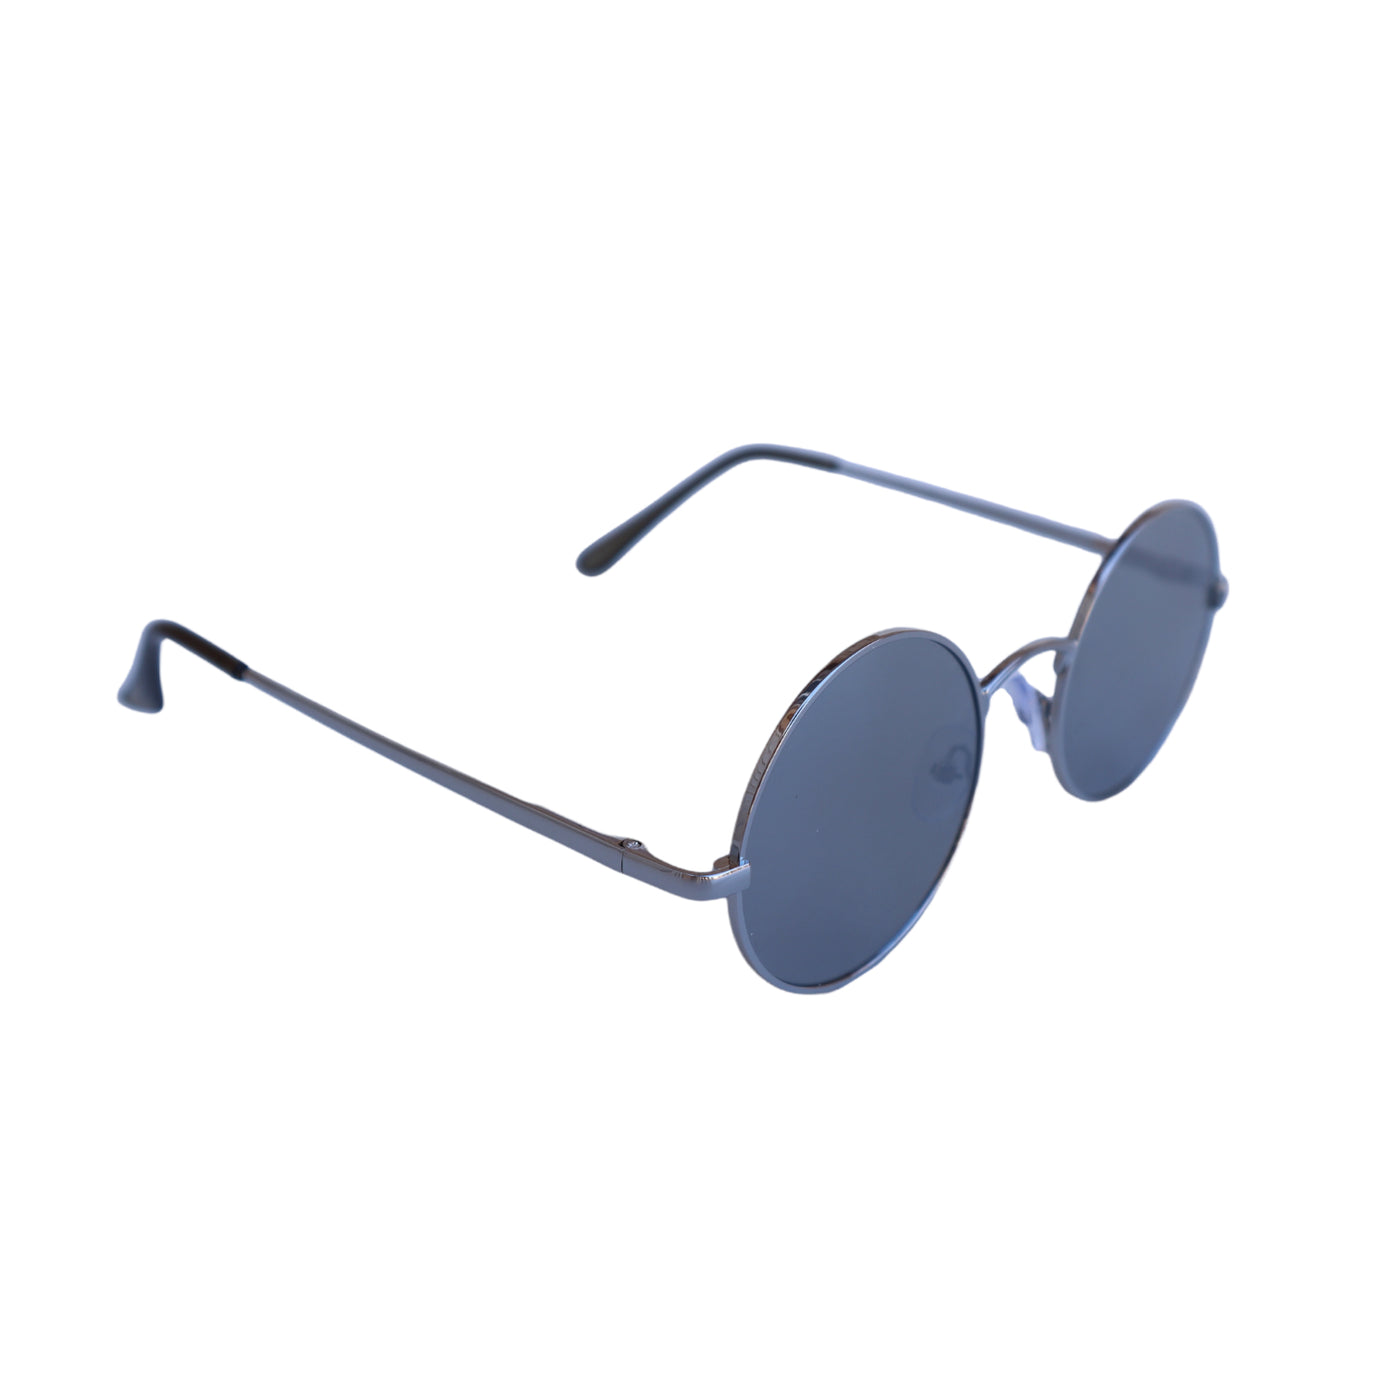 EyeDentification Circular All Metal Frame Sunglasses w/ Reflective BLACK Lens